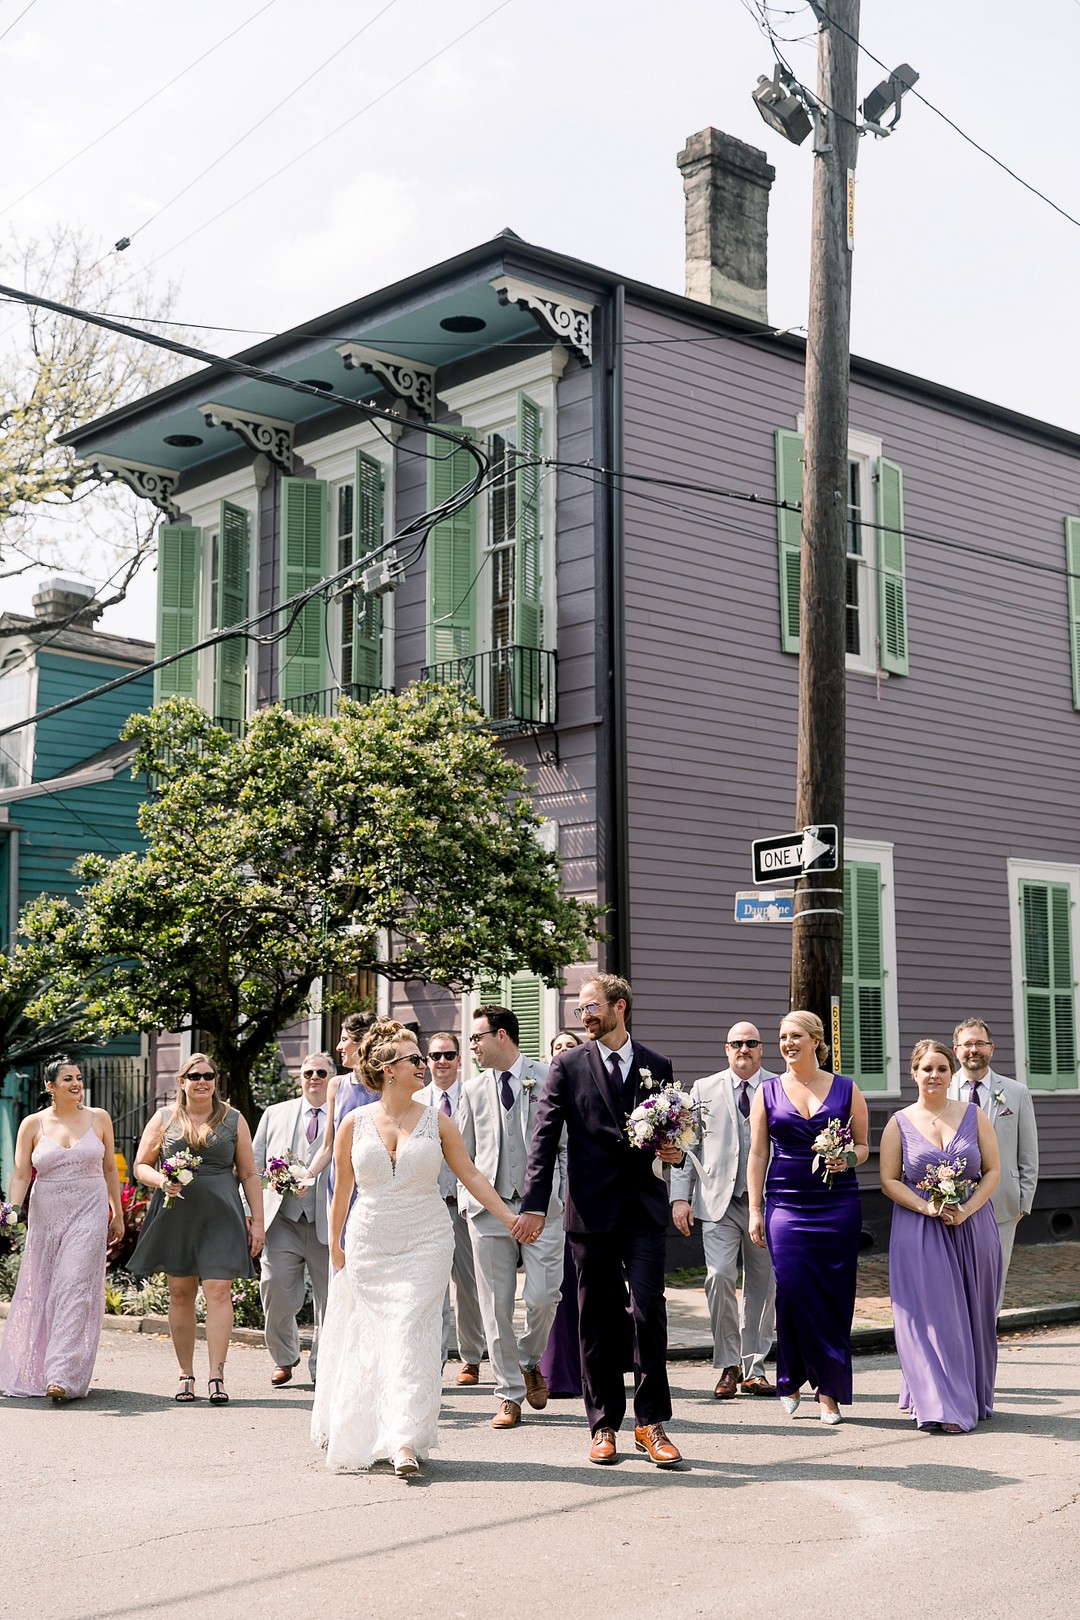 The groomsmen were rocking dove grey three piece suits with purple ties